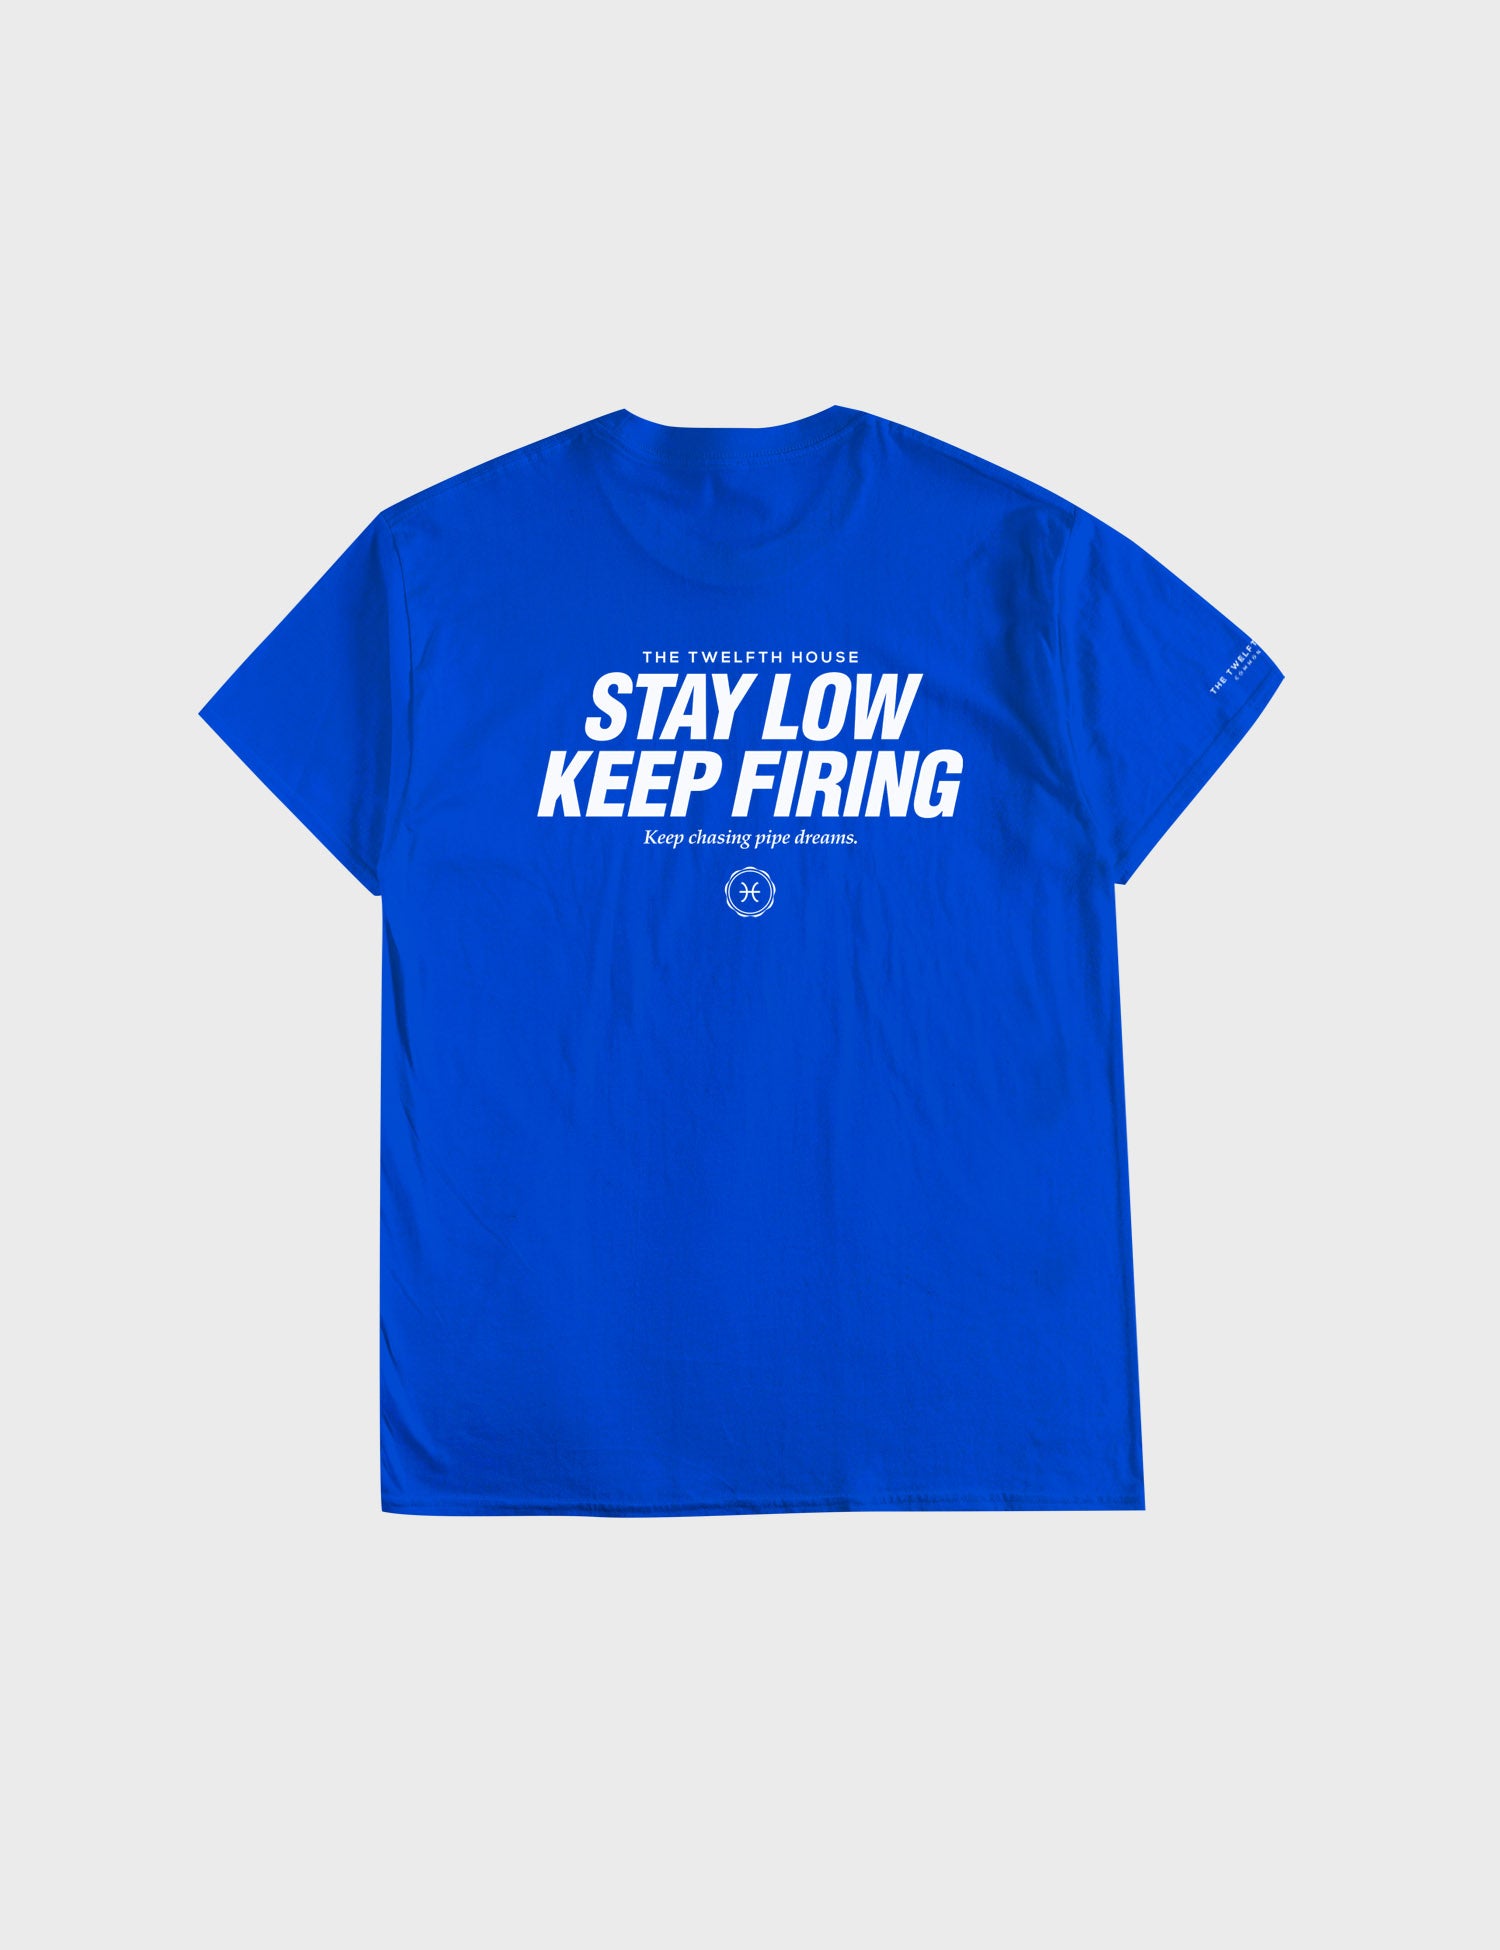 Stay Low Keep Firing (Royal Blue/White)